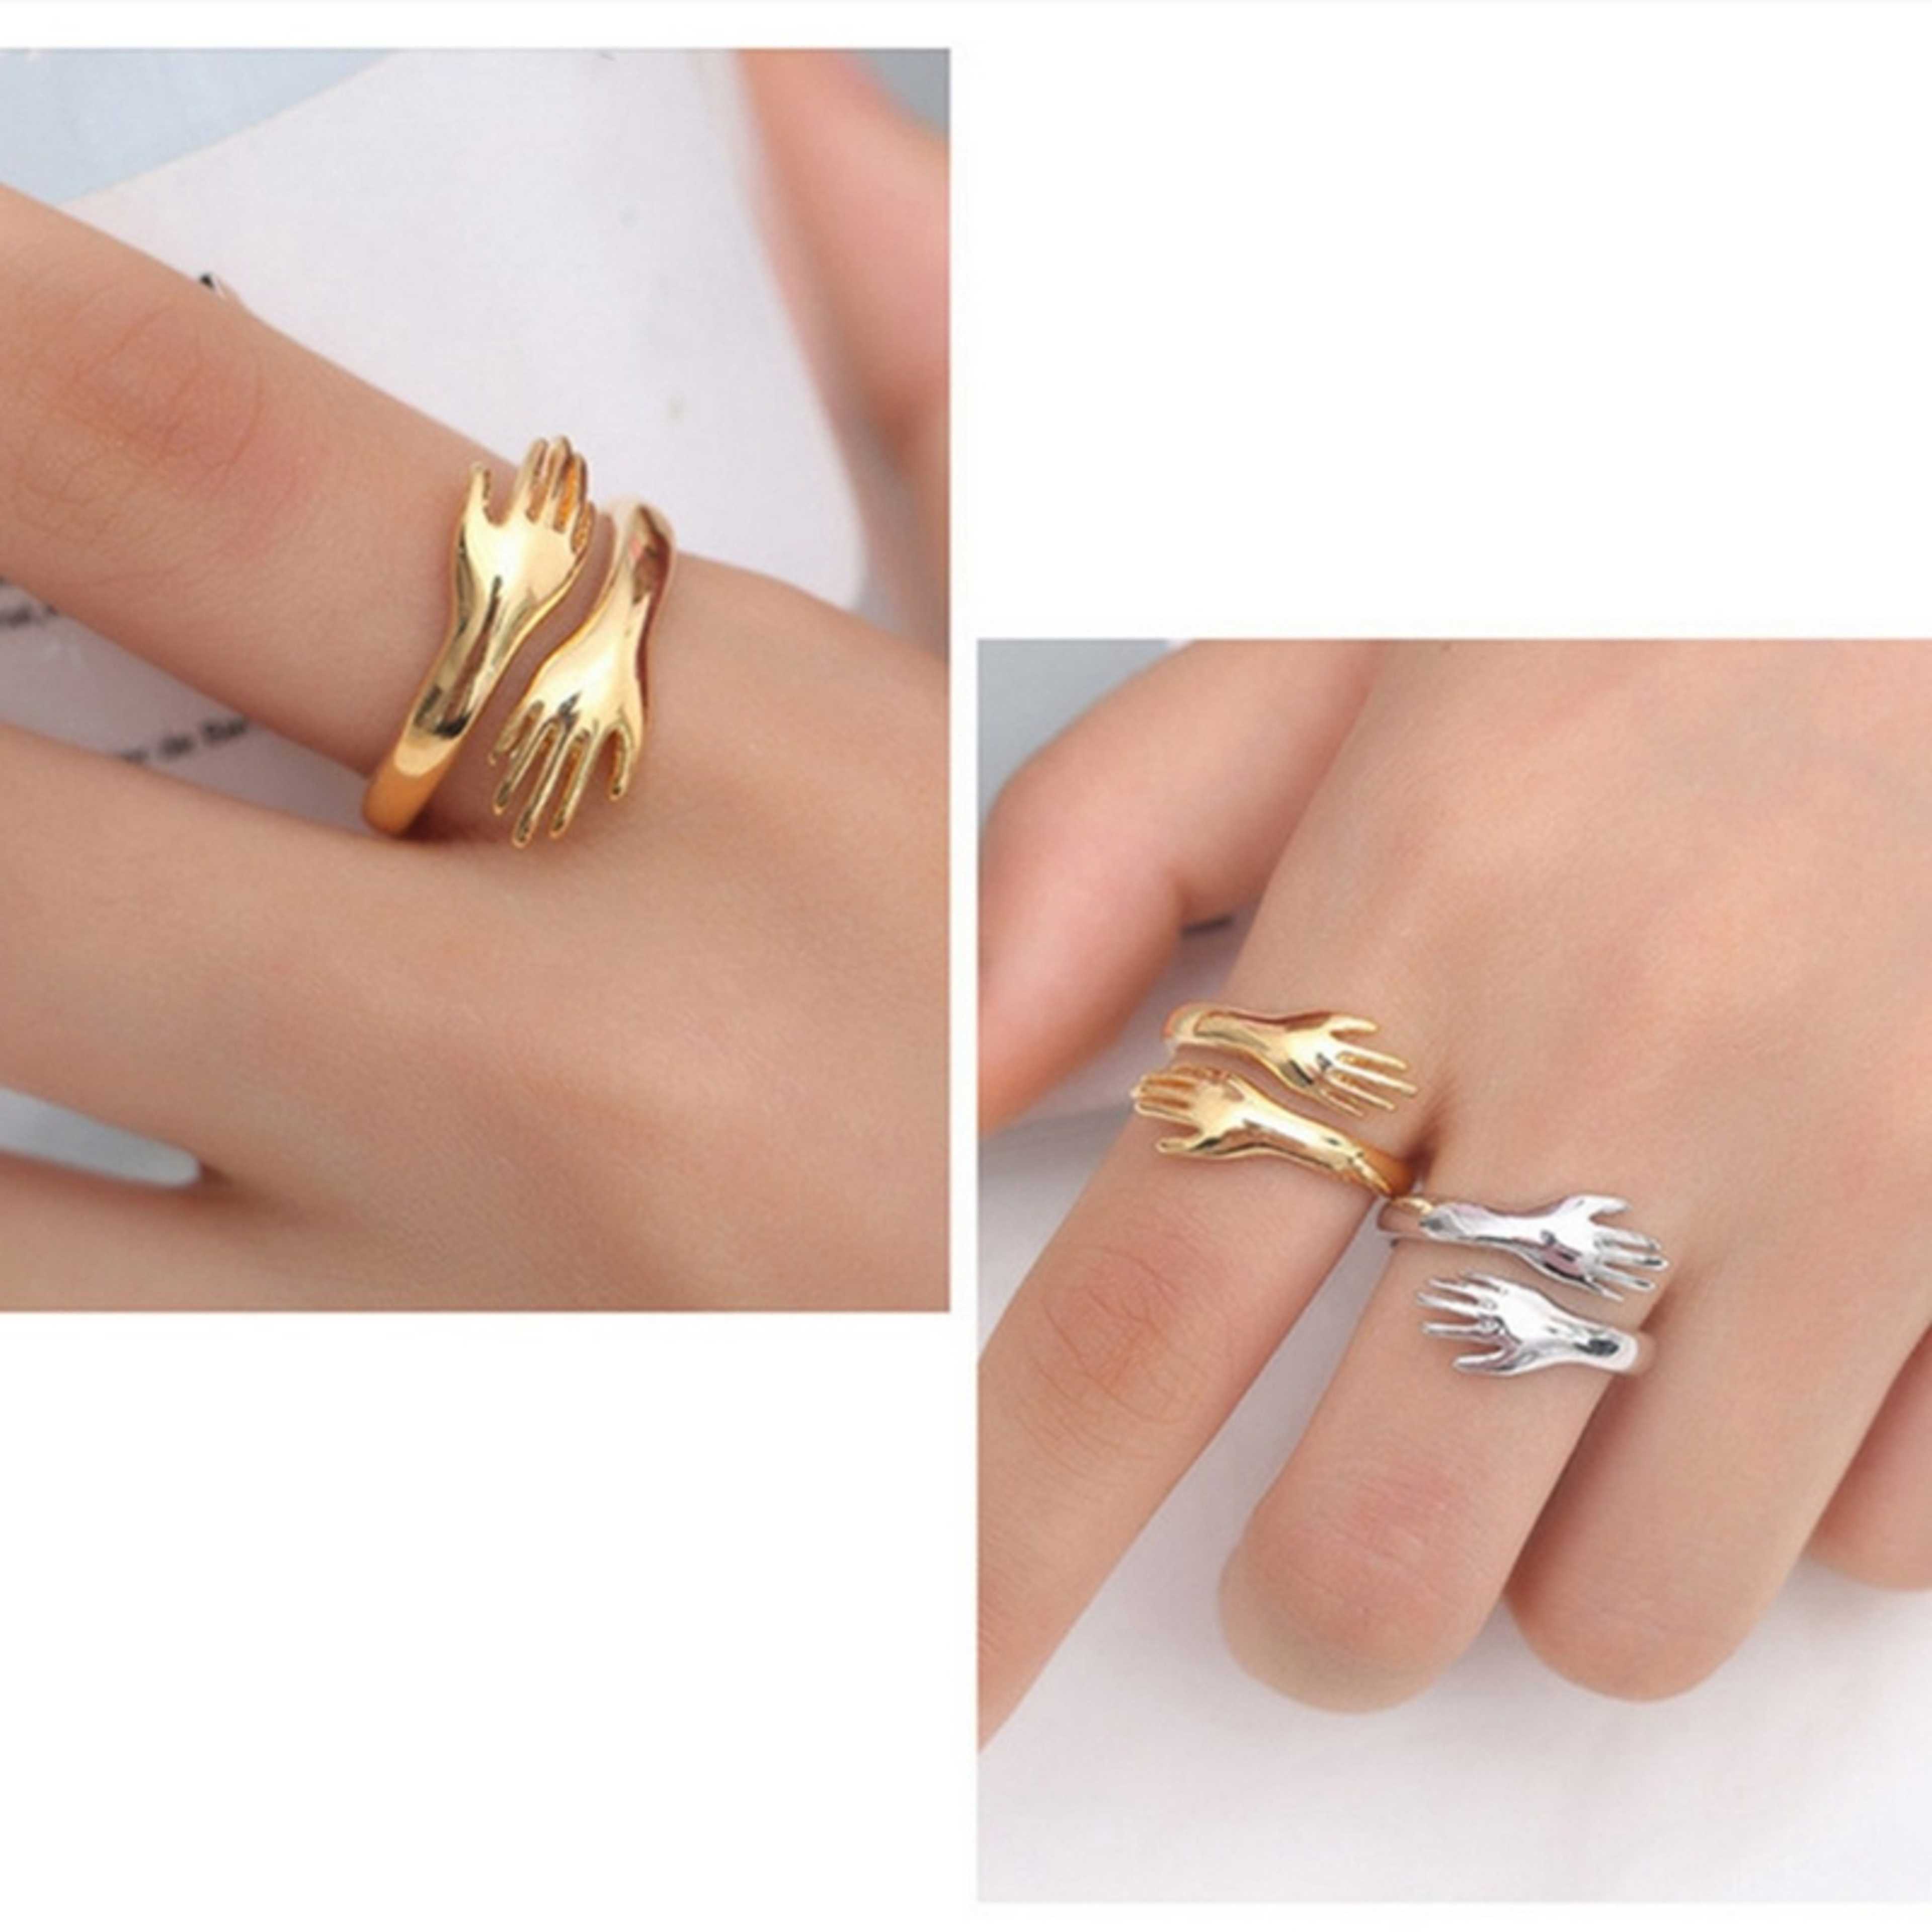 Male / Female Rings, Hug Pattern Finger Ring Metal Circlet Nice Gift